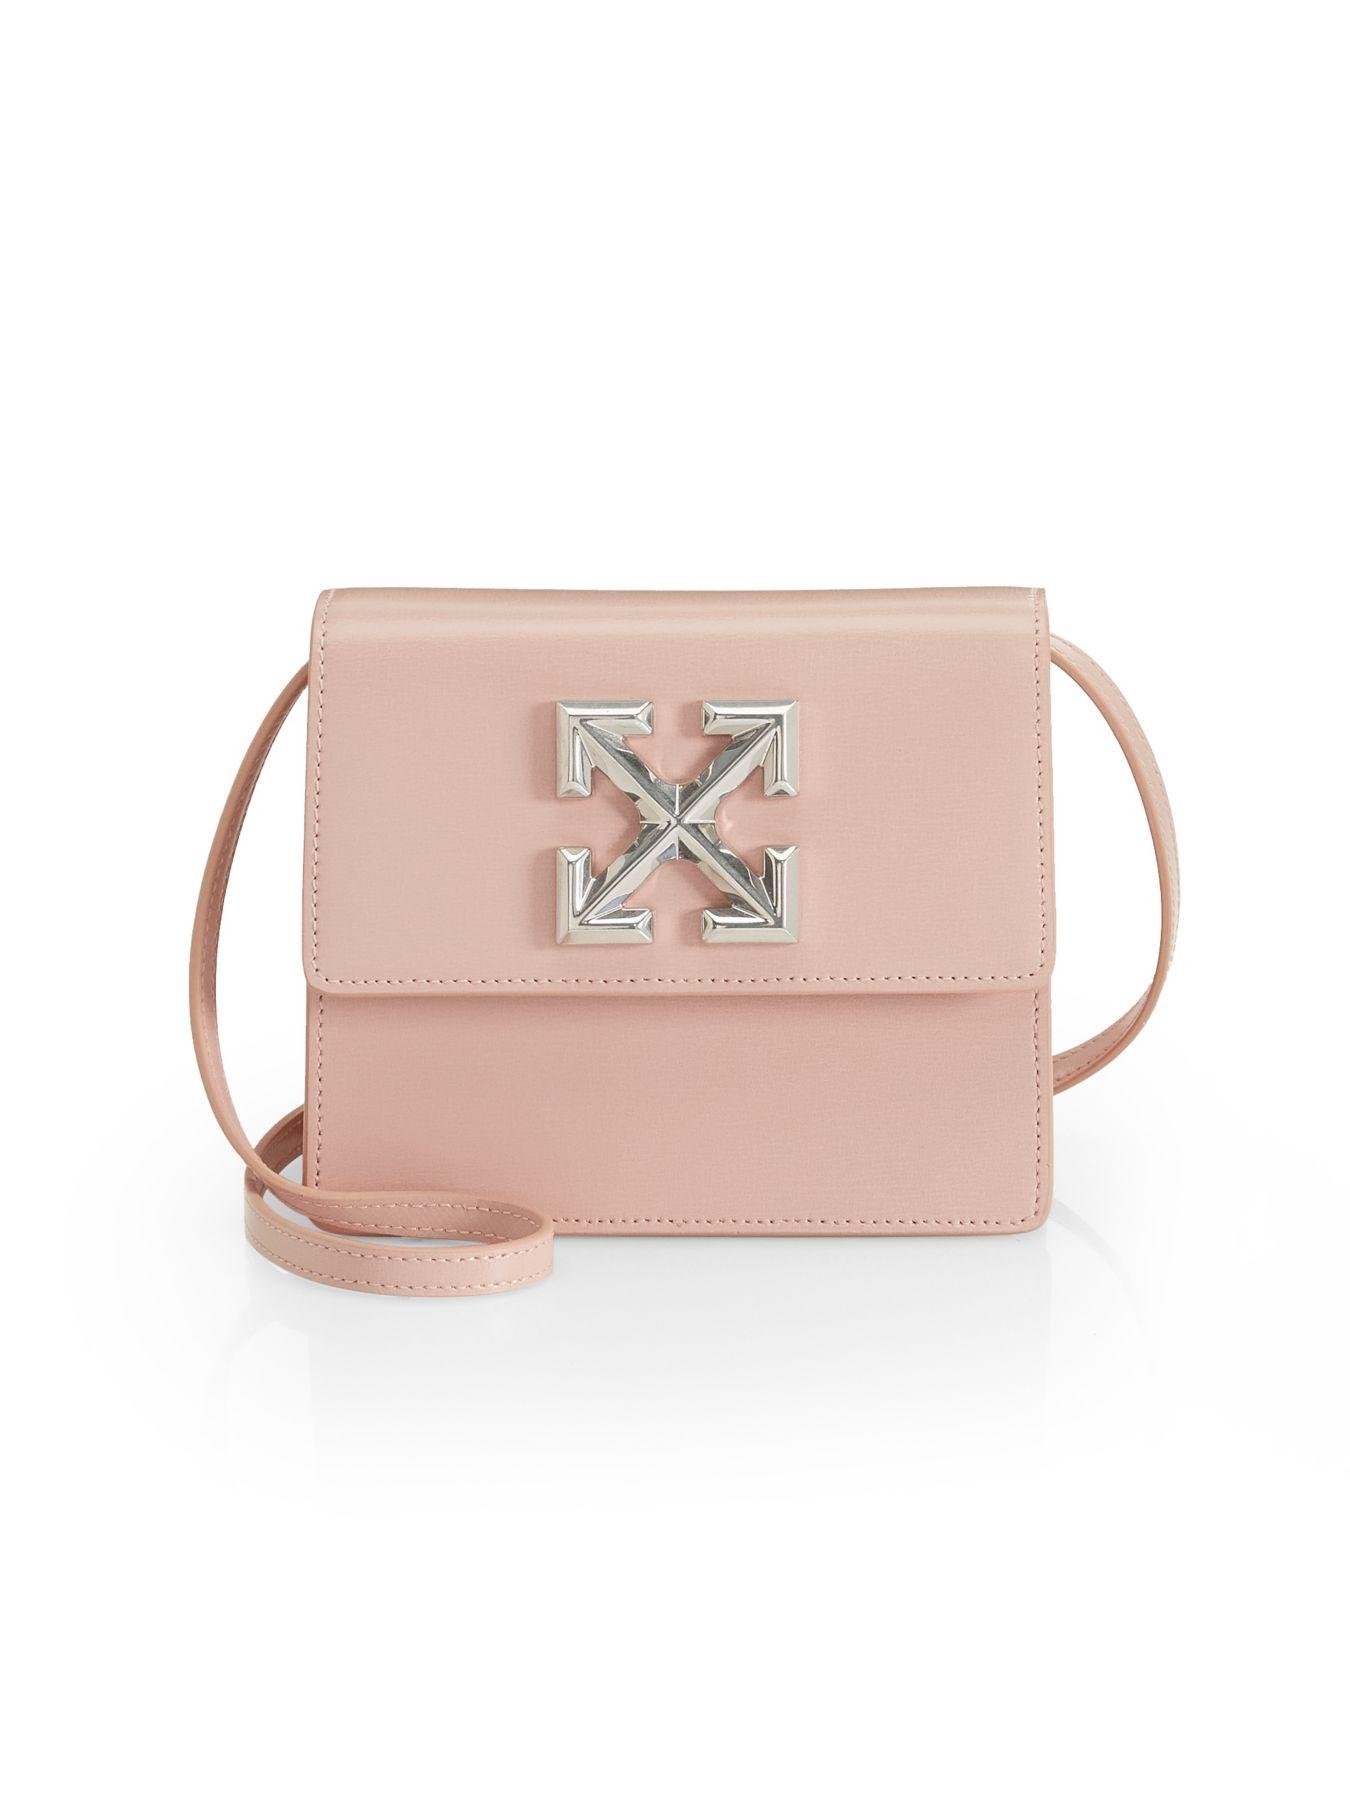 Off-White c/o Virgil Abloh Jitney 0.7 Leather Crossbody Bag in Light Pink (Pink) - Lyst